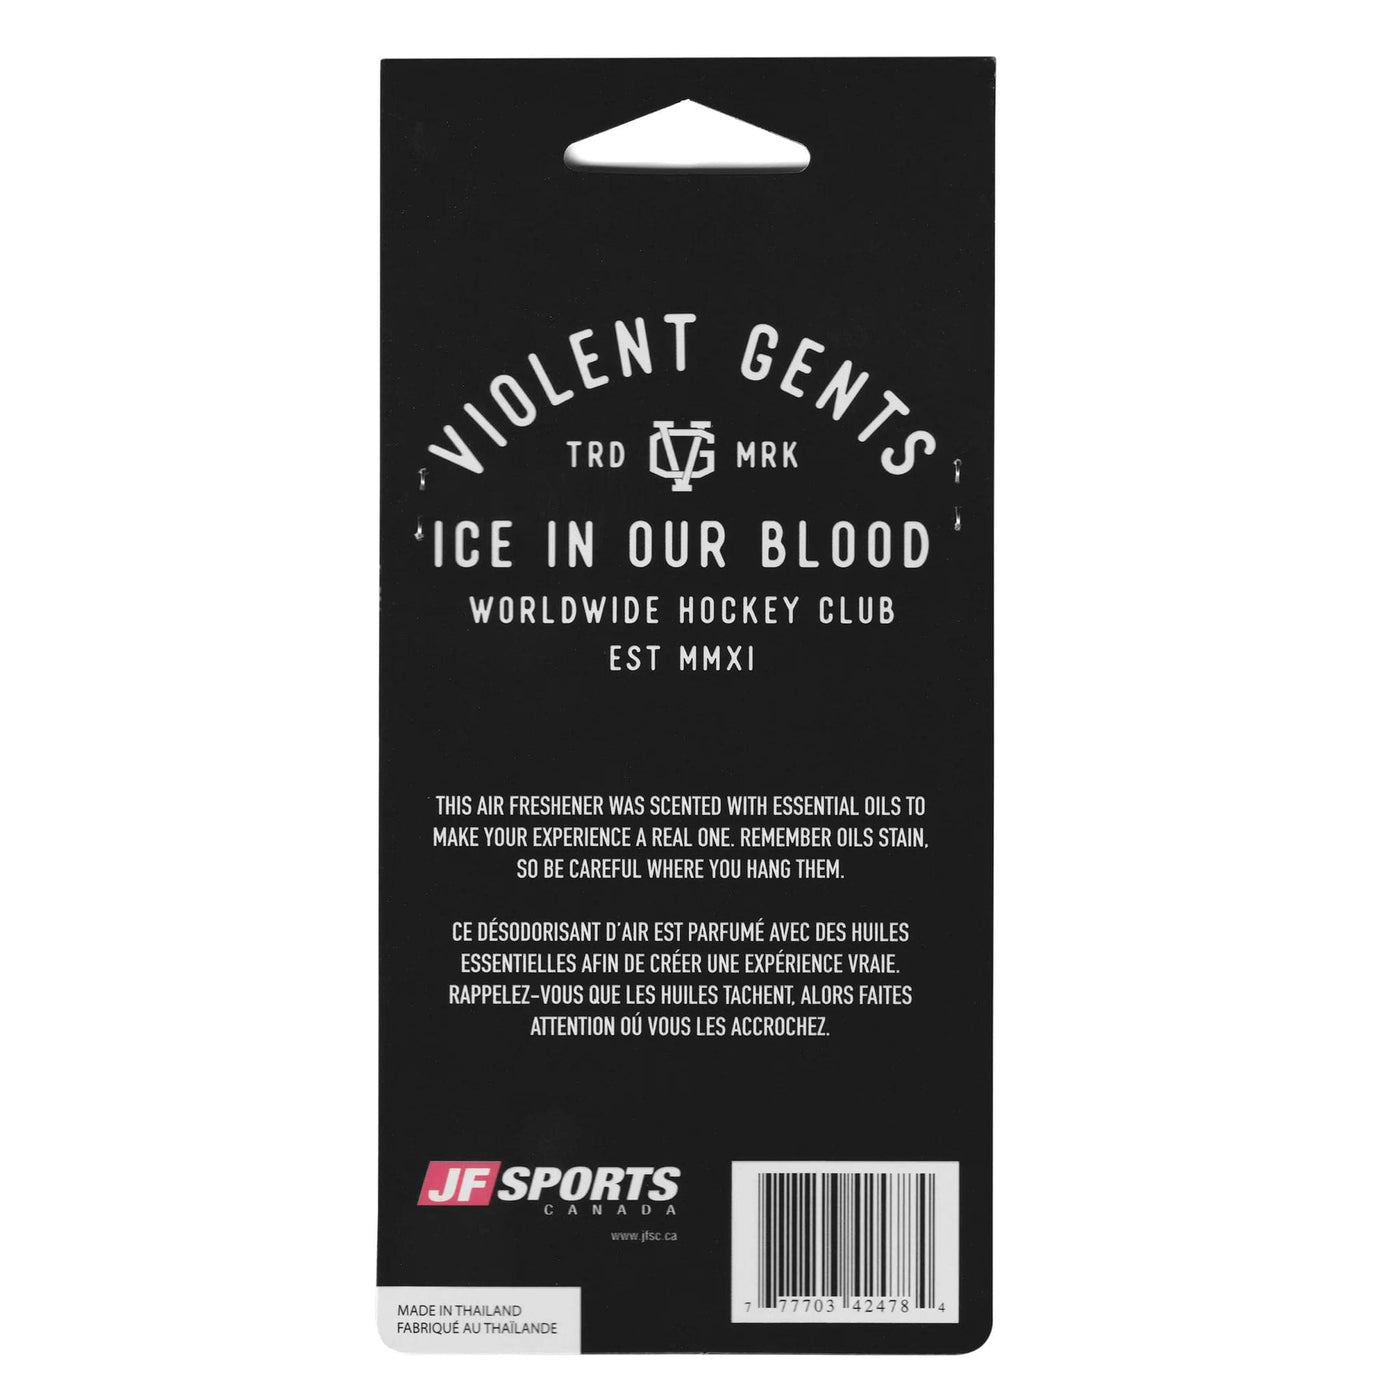 Violent Gentlemen Black Ice Specialist Air Freshener - The Hockey Shop Source For Sports